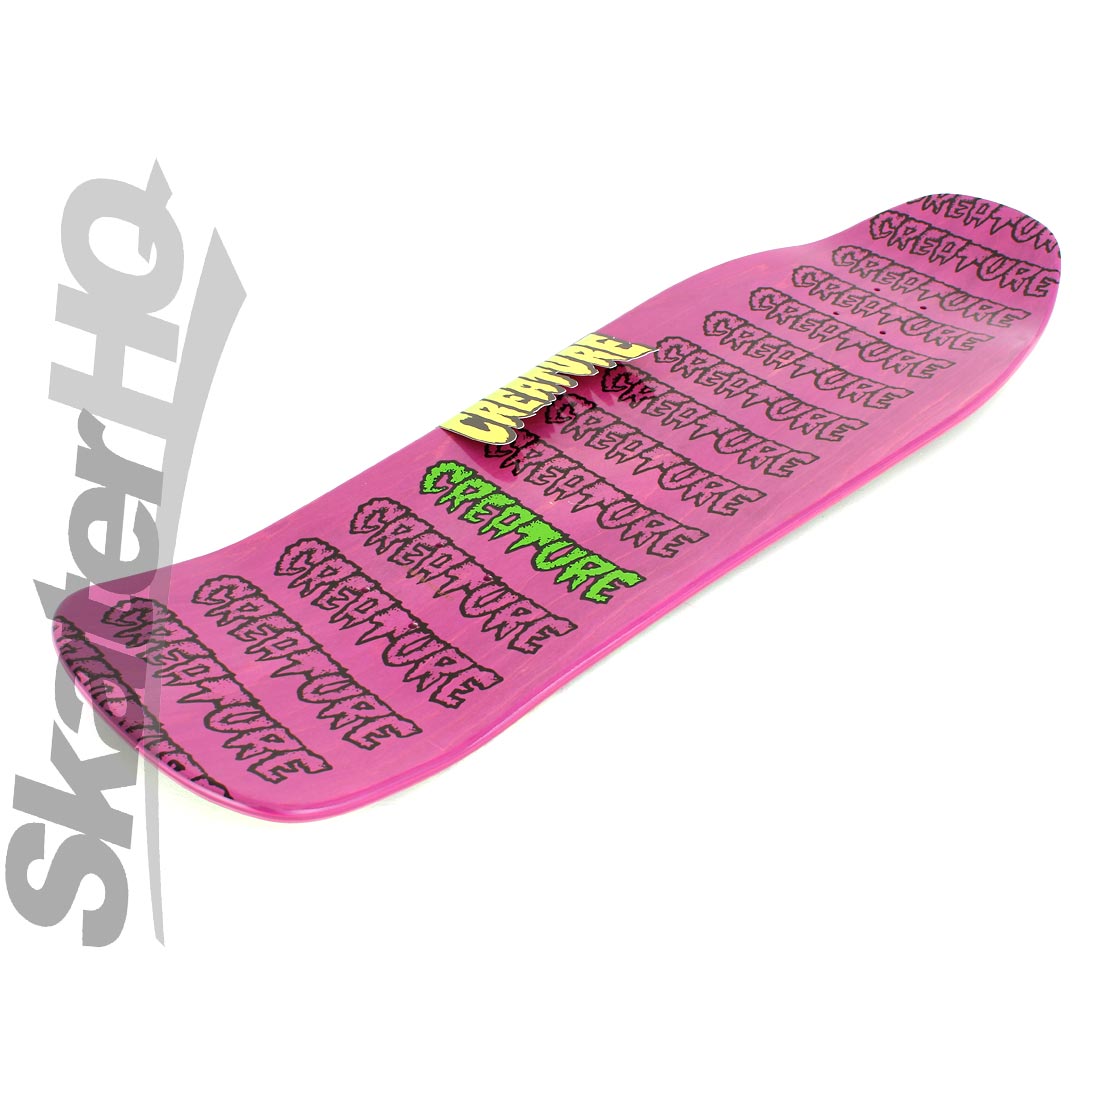 Creature Kimble Sea Bug 10.0 Deck - Purple Skateboard Decks Old School